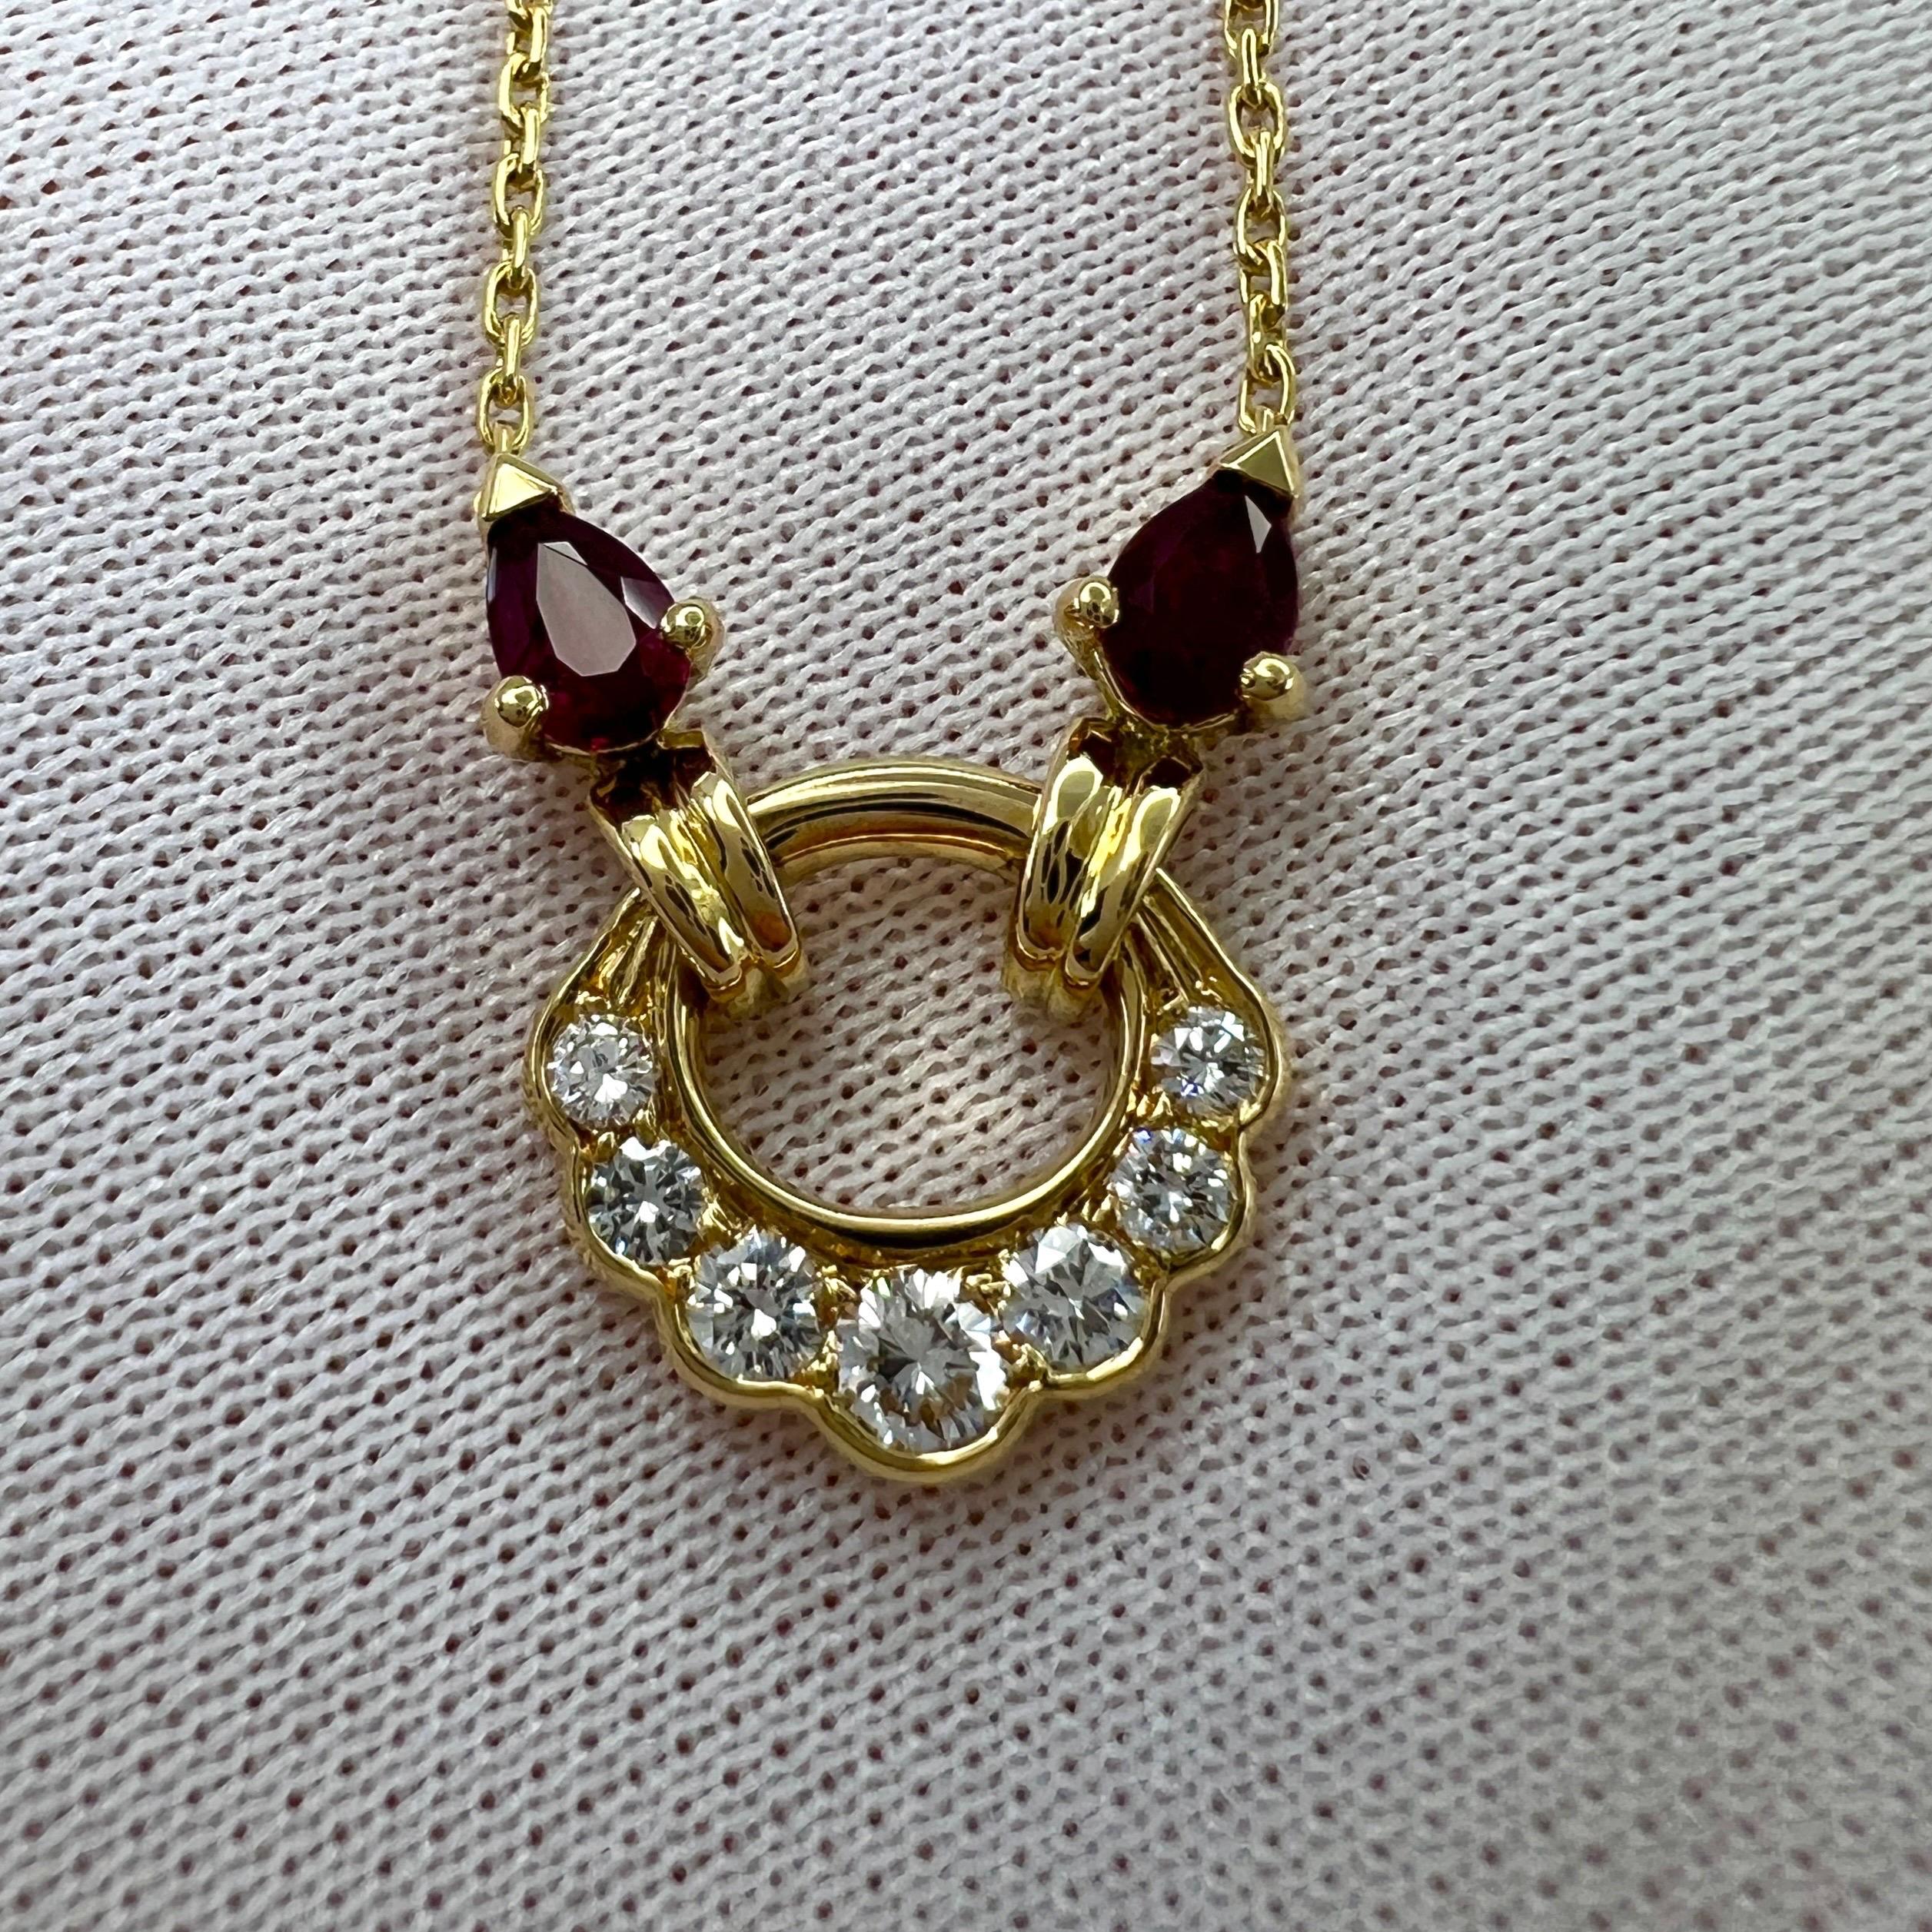 Rare Vintage Van Cleef & Arpels Ruby Diamond 18k Yellow Gold Pendant Necklace For Sale 3